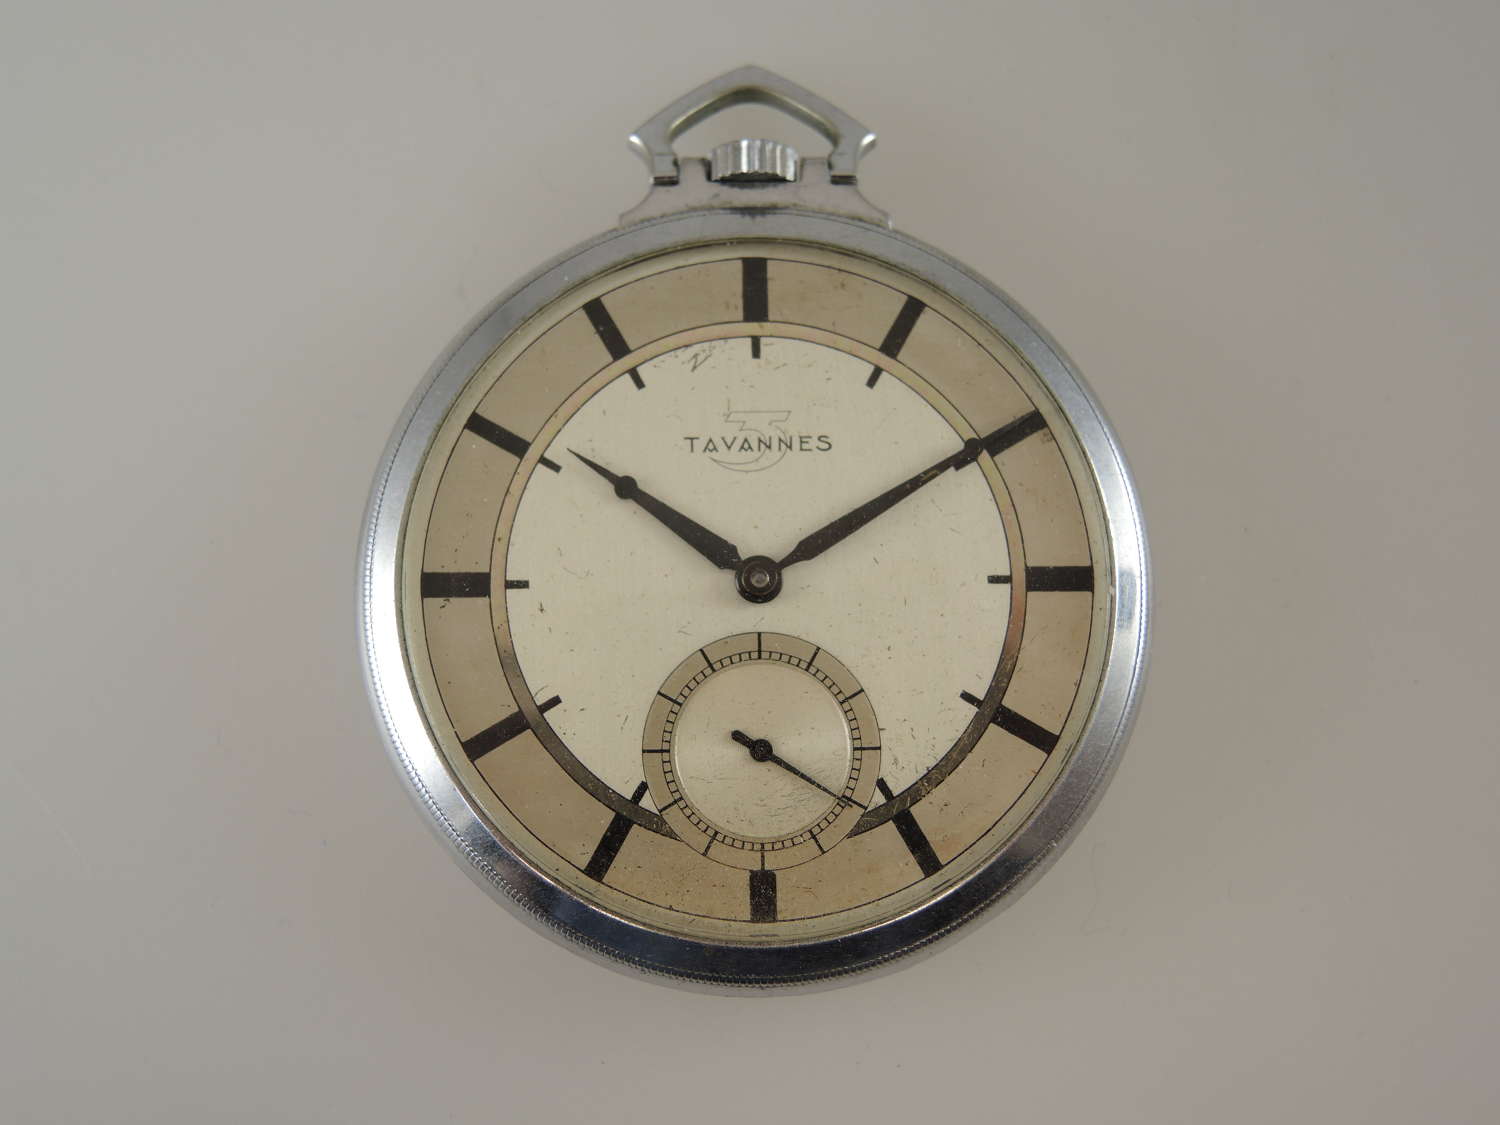 Stylish Art Deco pocket watch by Tavannes c1935